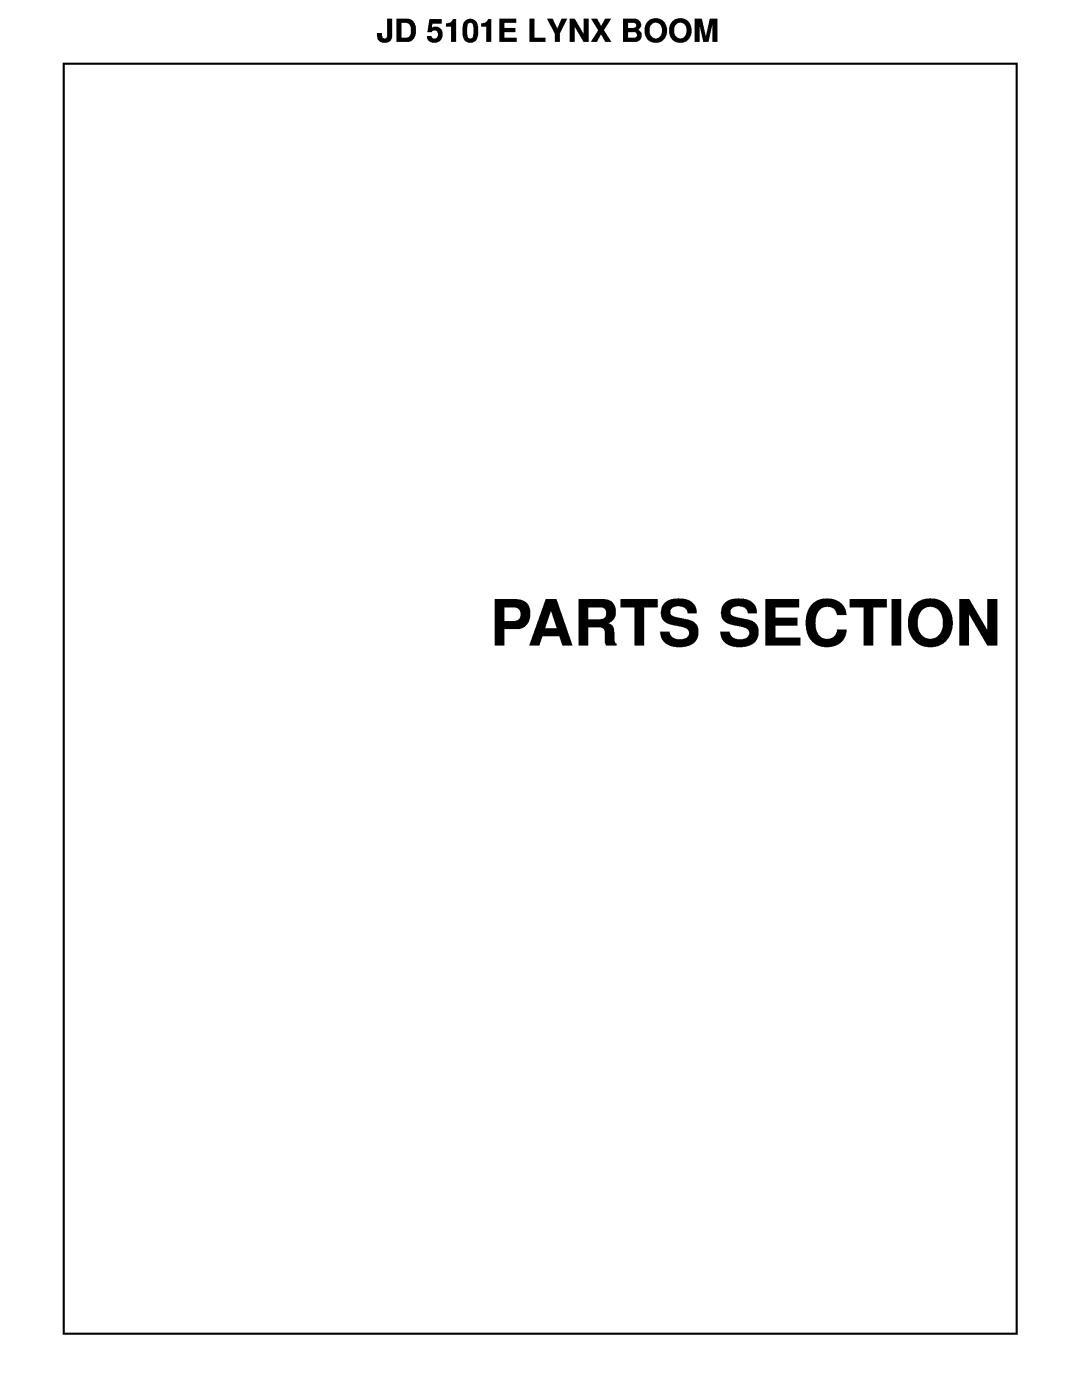 Tiger Products Co., Ltd 5083E, 5093E manual Parts Section, JD 5101E LYNX BOOM 